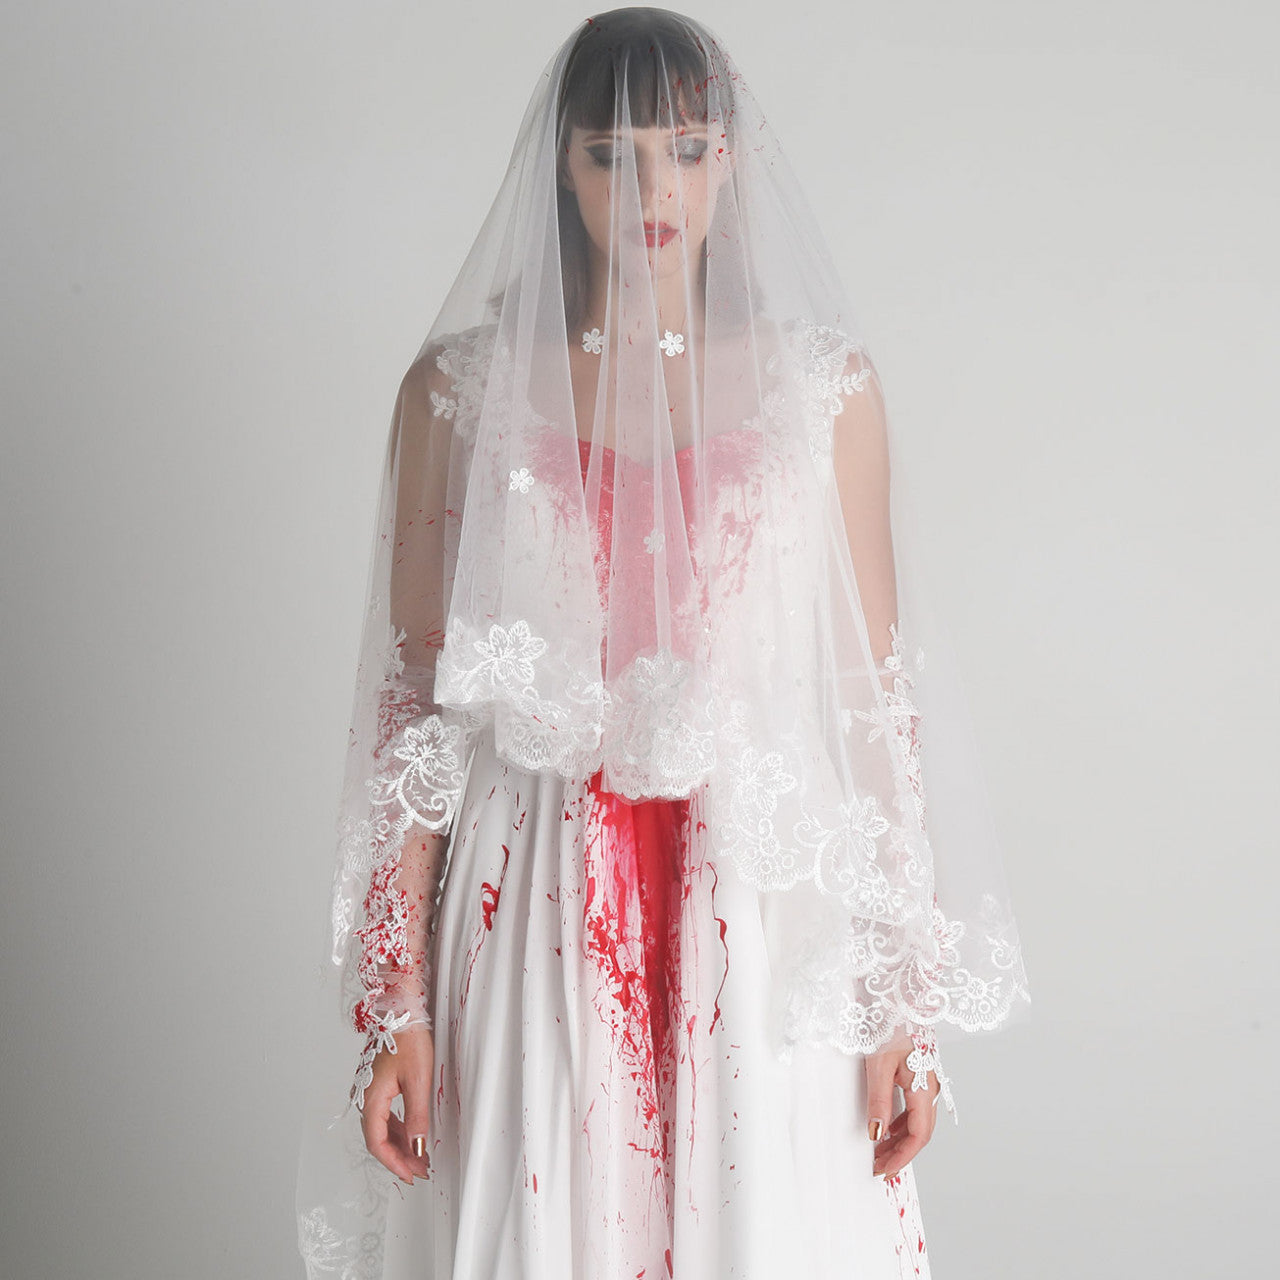 Blood Wedding Veil